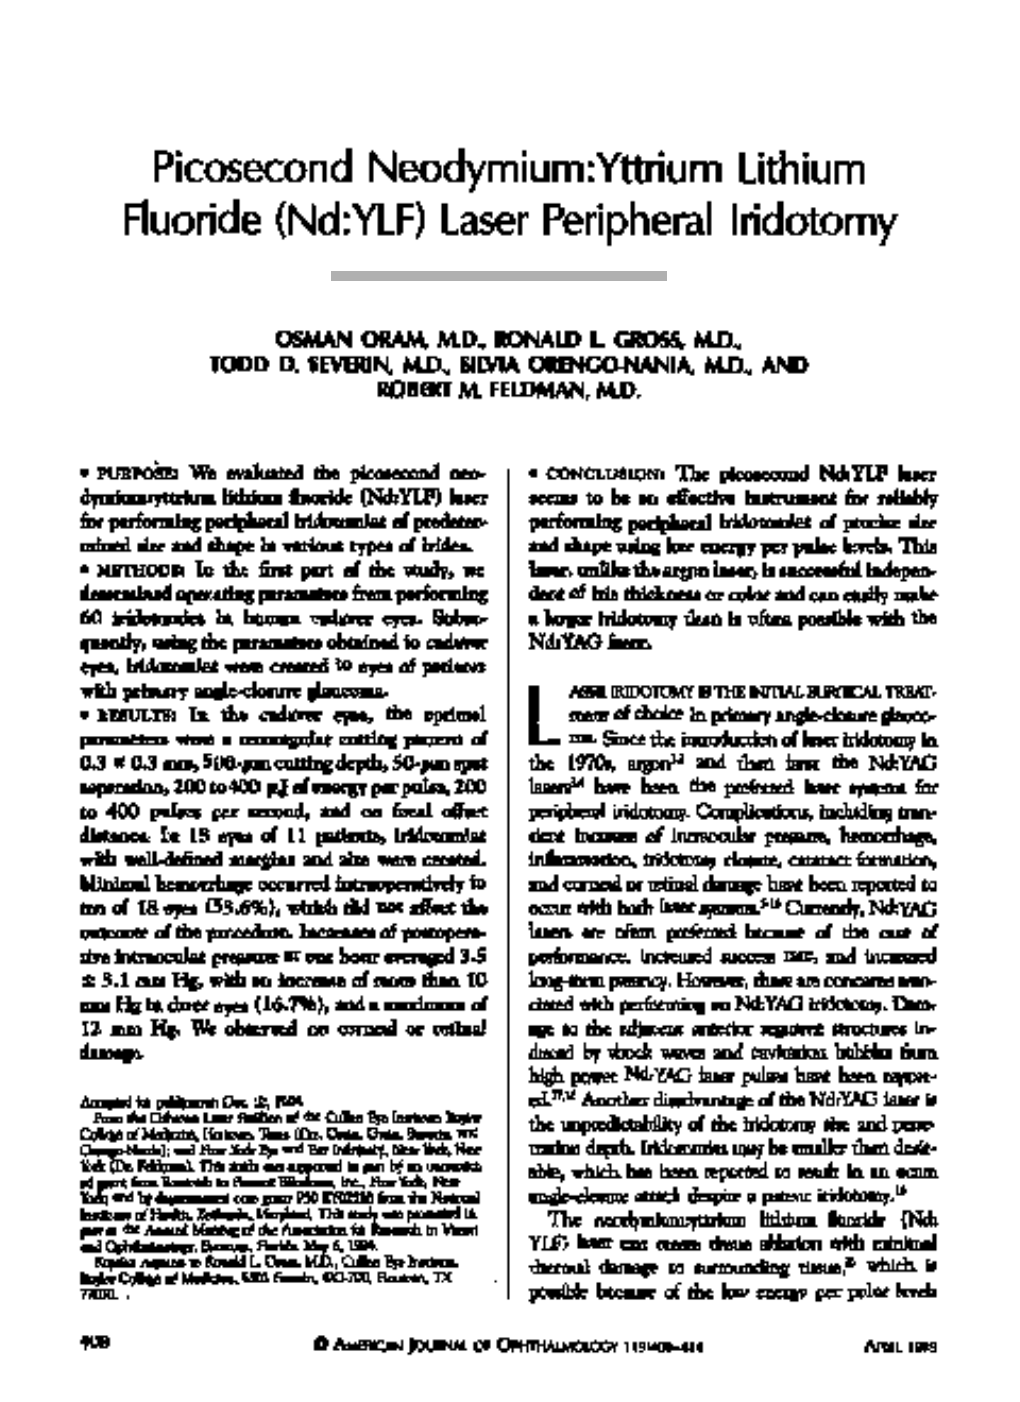 Picosecond Neodymium:Yttrium Lithium Fluoride (Nd:YLF) Laser Peripheral Iridotomy